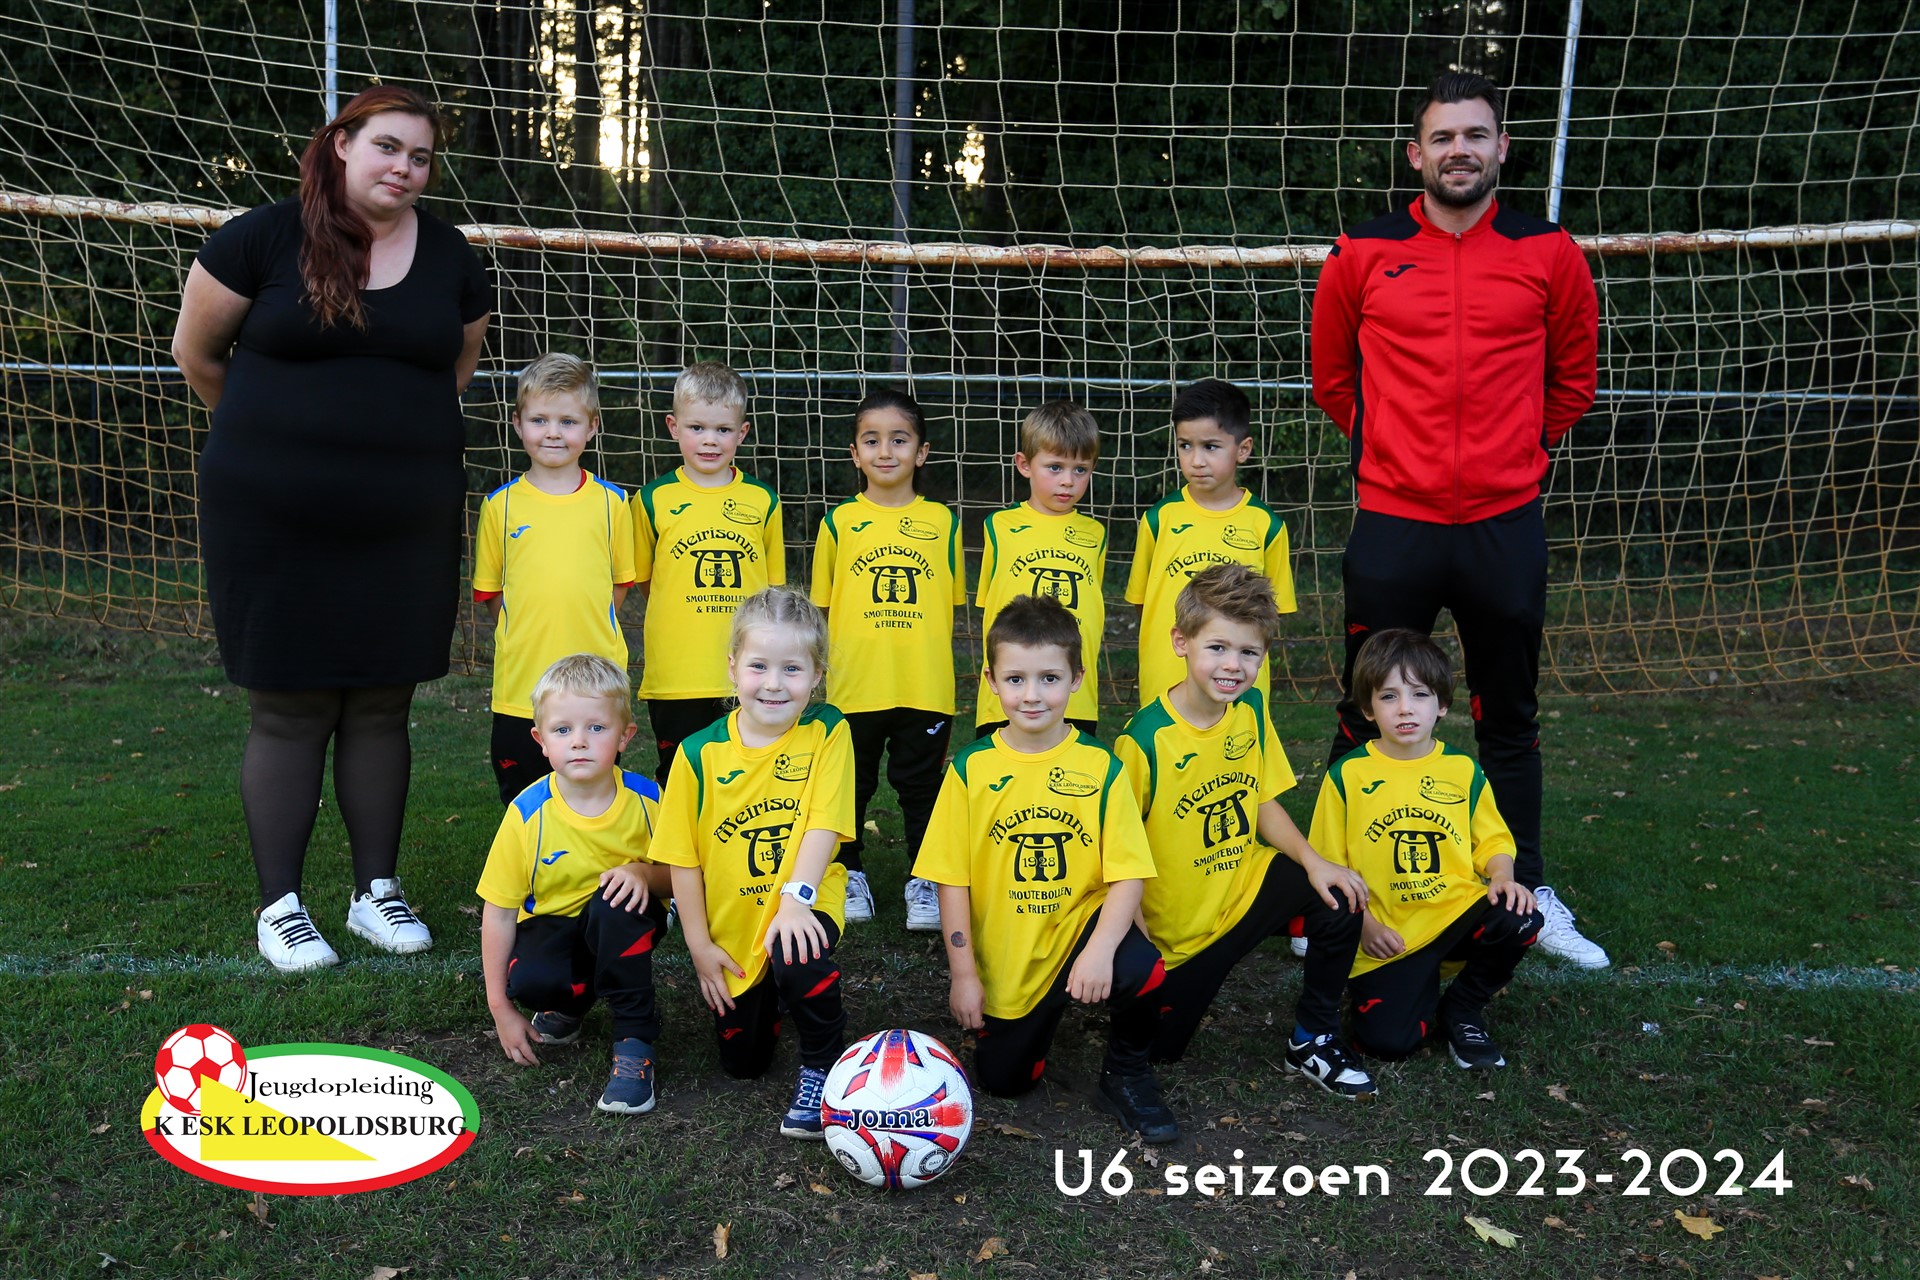 U6 ploegfoto jeugdopleiding voetbalclub K.ESK Leopoldsburg